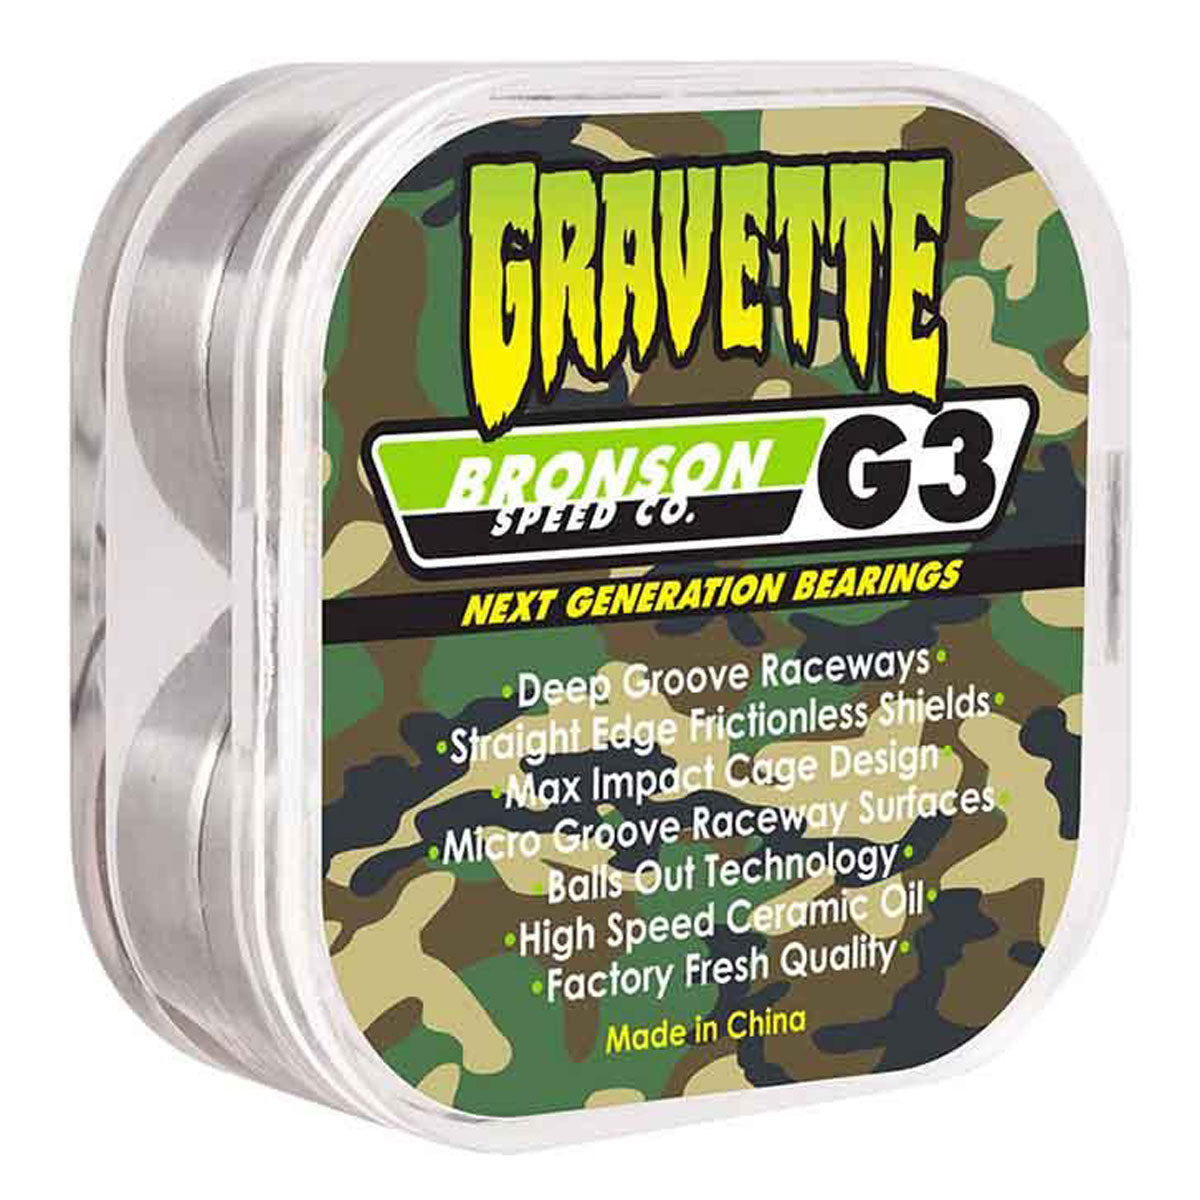 Bronson David Gravette Pro G3 Bearings - Camo image 3